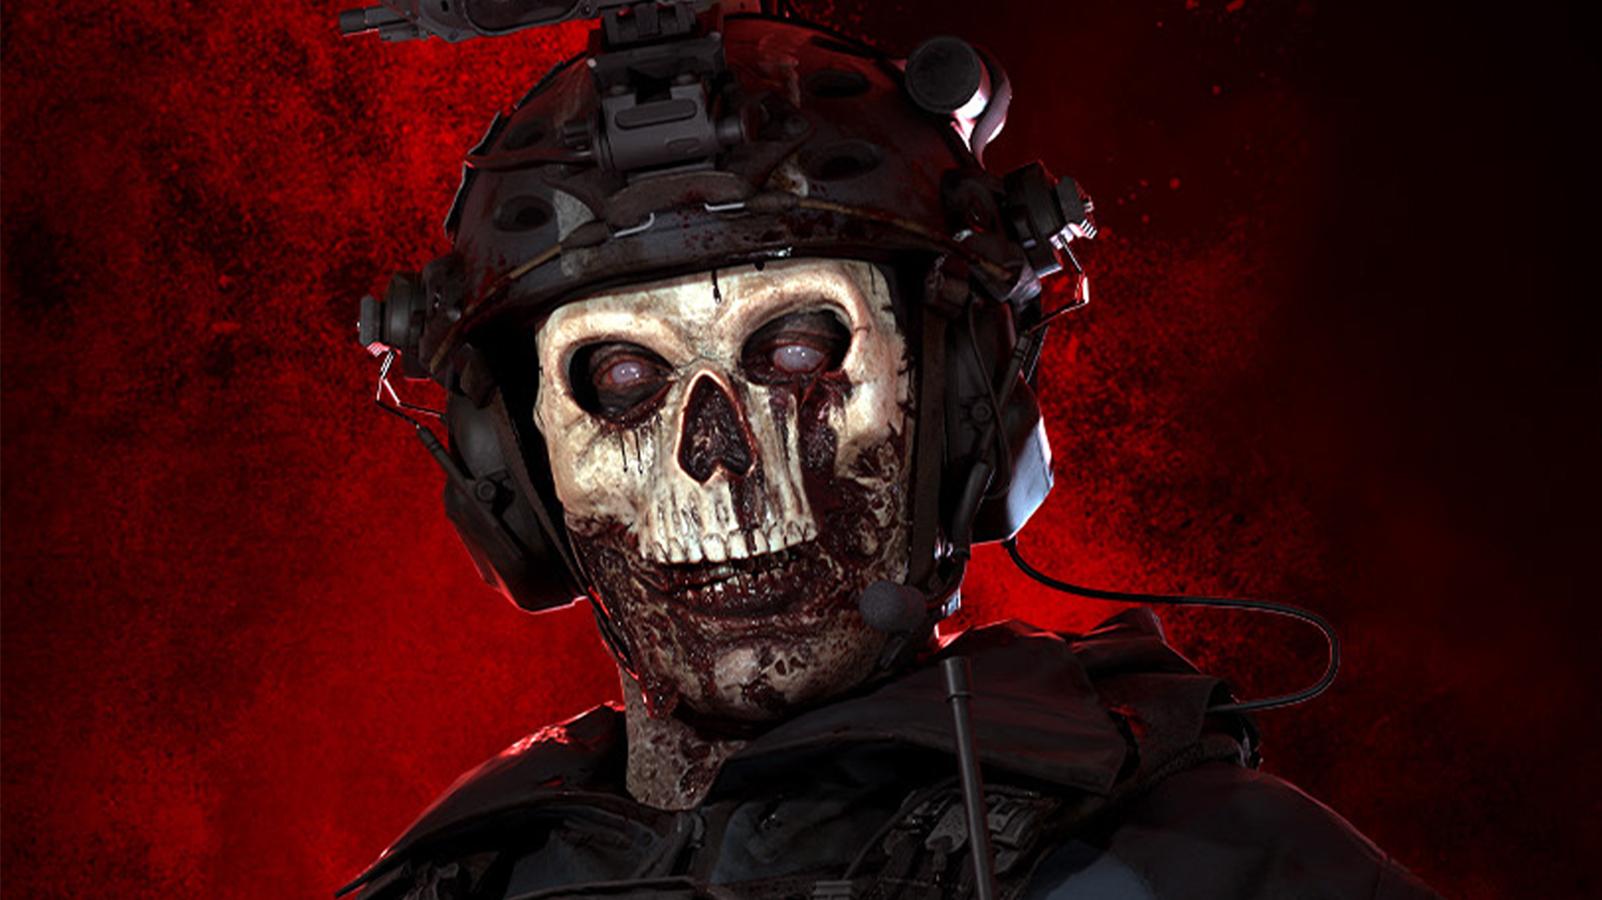 Zombie Ghost Operator skin CoD